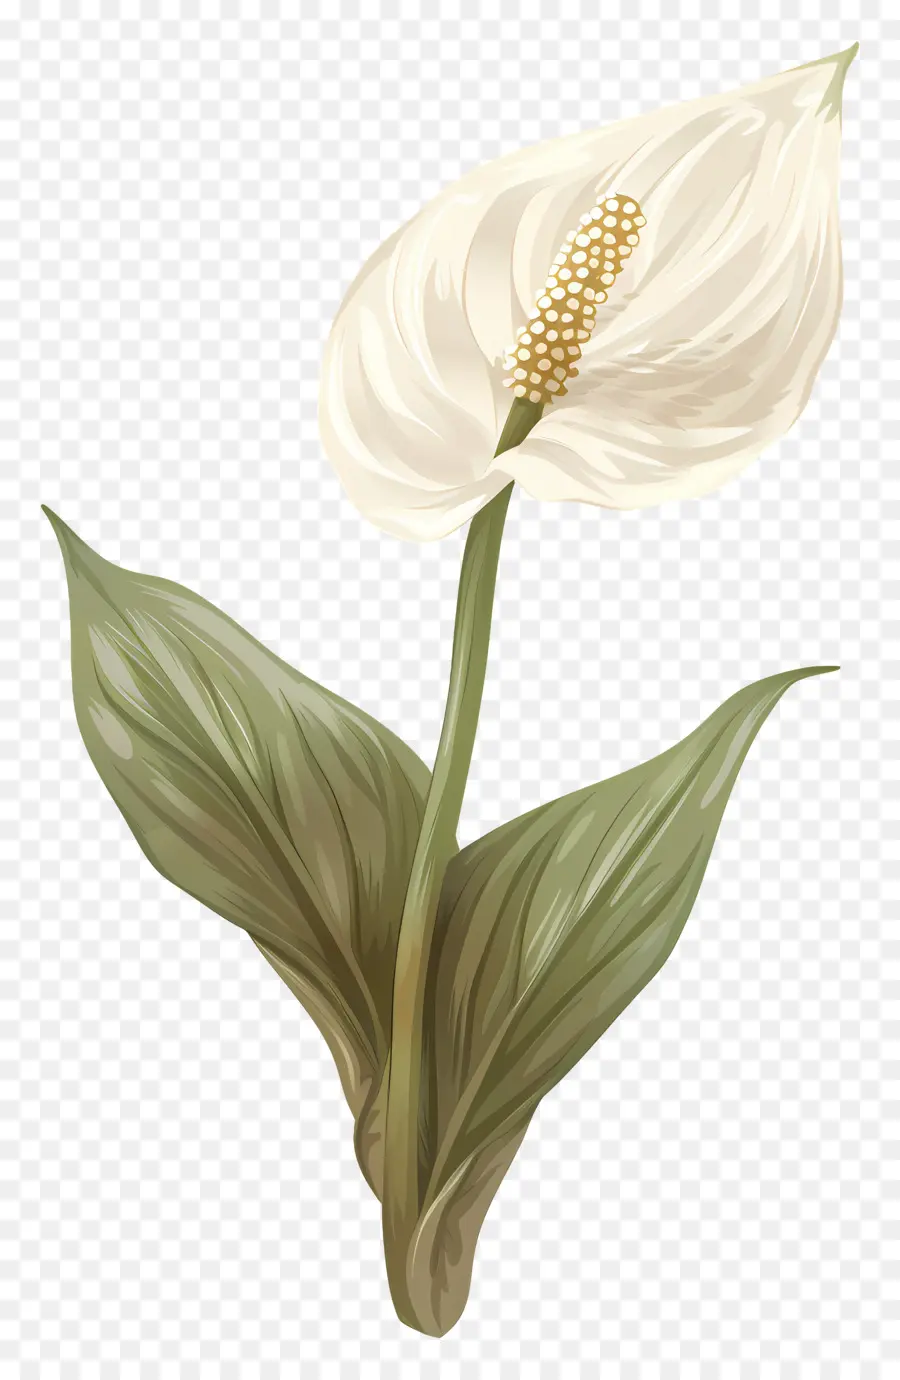 Single Peace Lily Calla Lily Blumenpflanze Pollen - Gesunde weiße Calla Lily mit Pollen